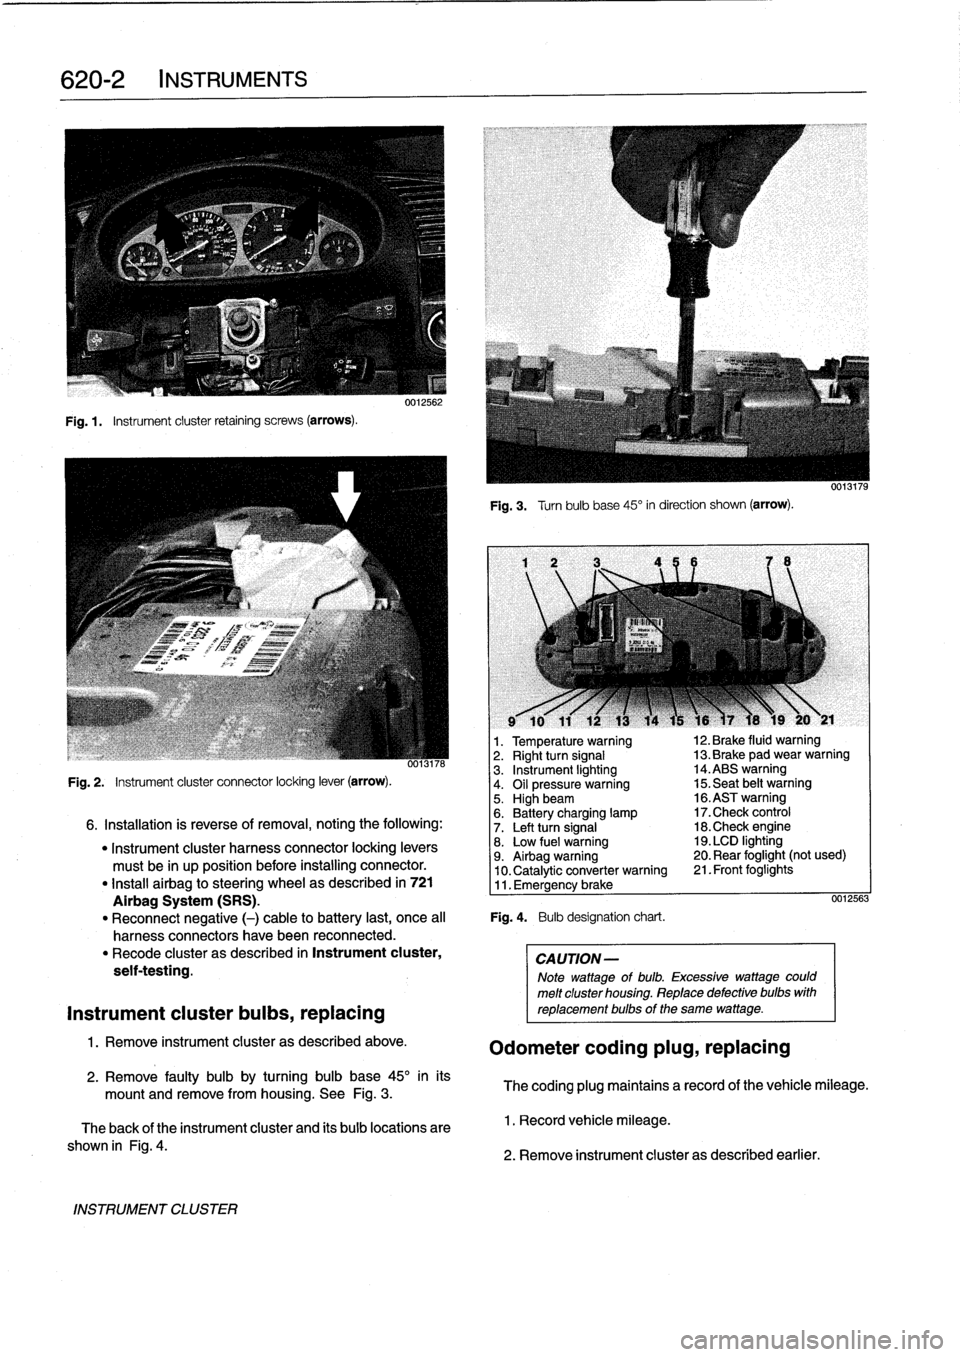 BMW M3 1993 E36 Workshop Manual 
620-2
INSTRUMENTS

Fig
.1.

	

Instrument
cluster
retaining
screws
(arrows)
.

INSTRUMENT
CLUSTER

0012562

Fig
.
3
.

	

Turnbulb
base
45°
in
direction
shown
(arrow)
.

l
v

	

w
r
v
9

	

10

	

1